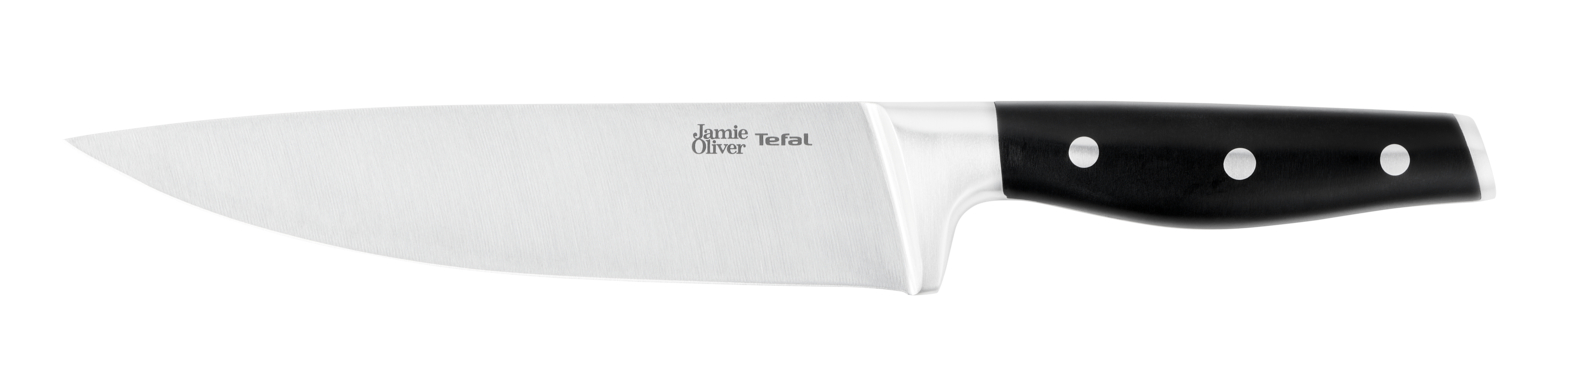 Шеф-нож Jamie Oliver 20 см K2670144 нож для чистки овощей jamie oliver 9 cм k2671144